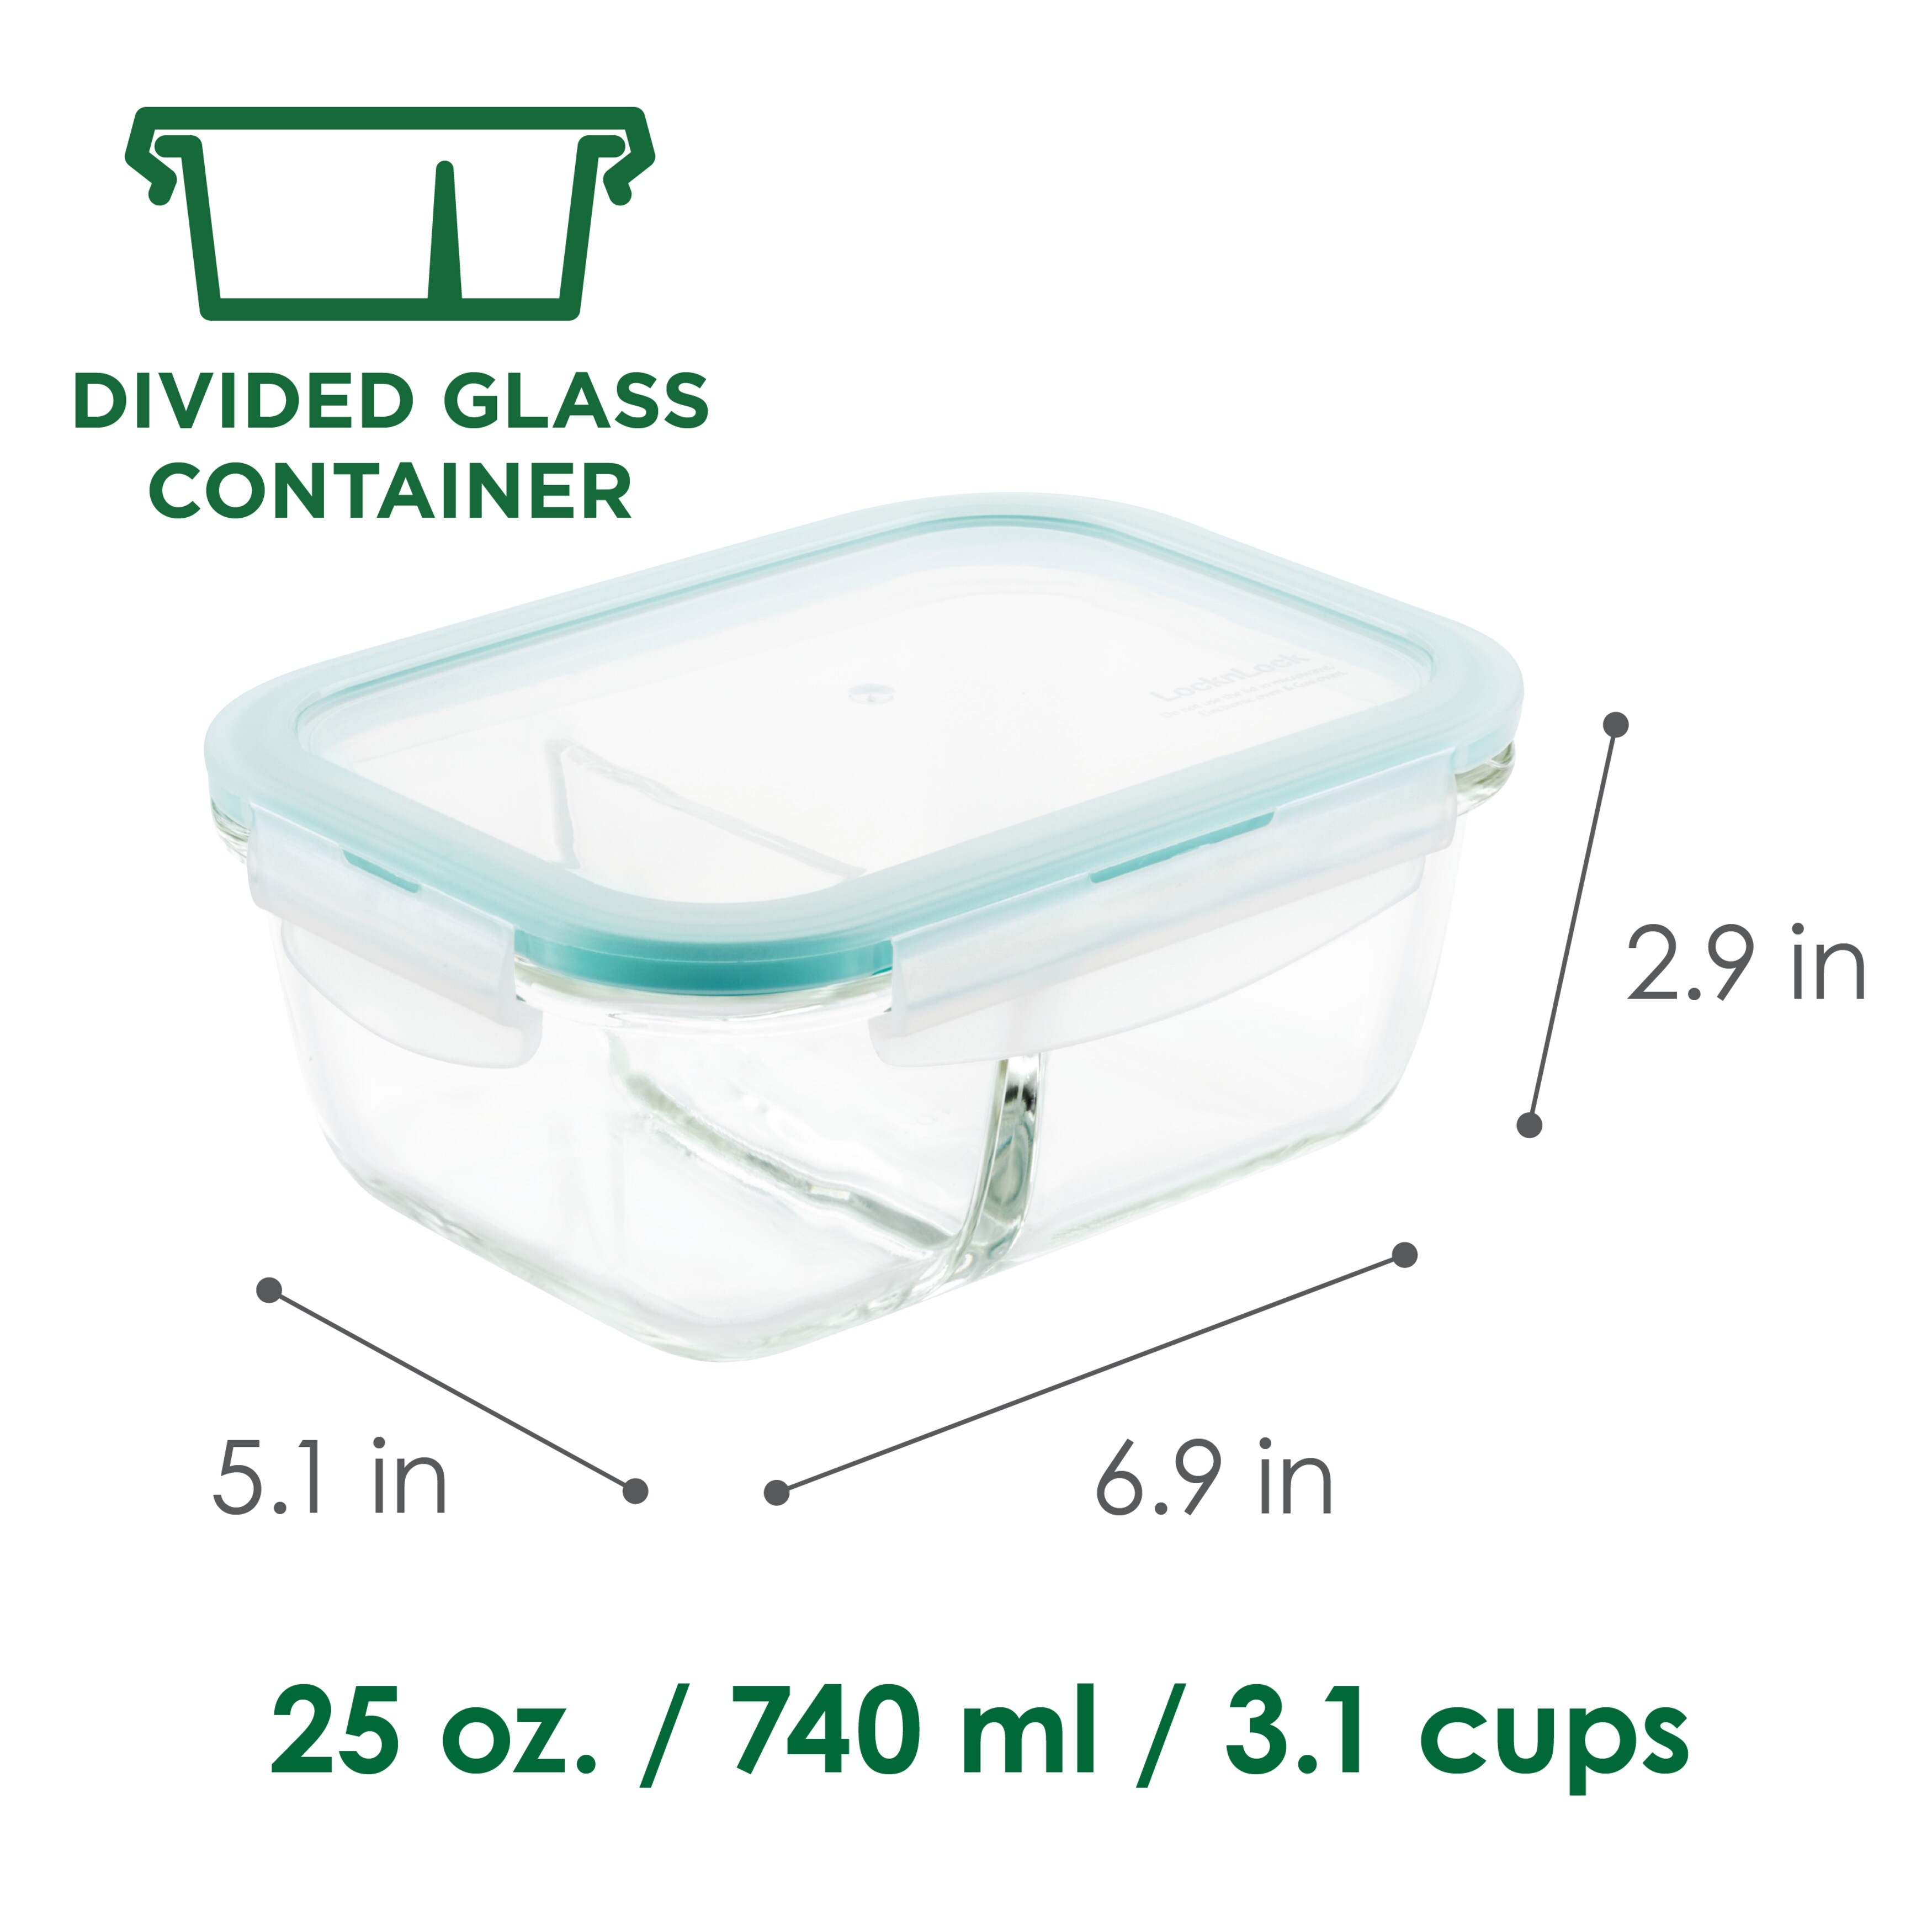 LocknLock Purely Better Glass Divided Food Storage 25oz 3 PC Set